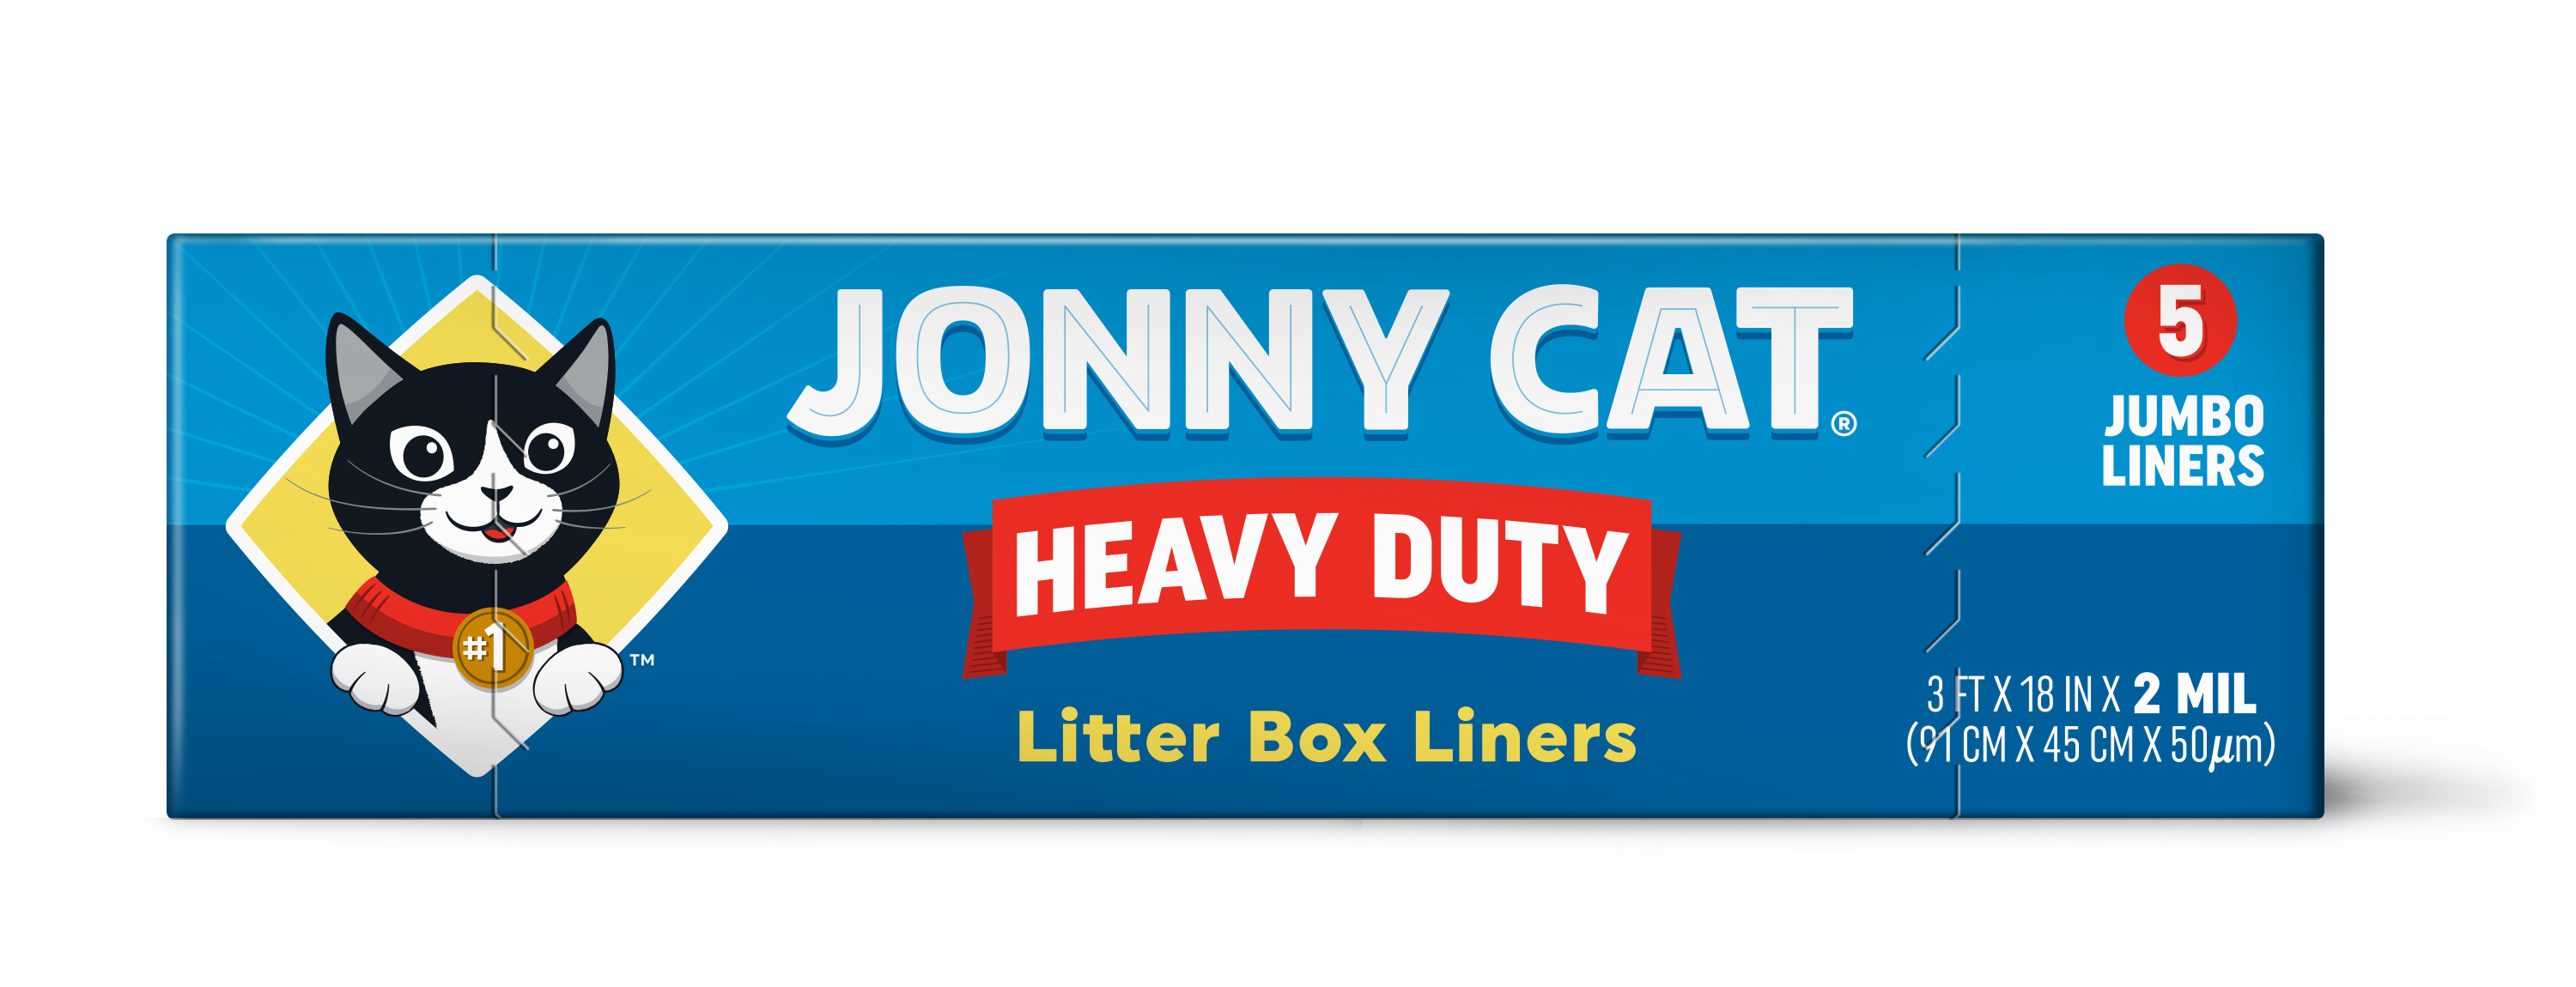 Jonny Cat Heavy Duty Jumbo Cat Litter Box Liners, 5 Count - image 5 of 7